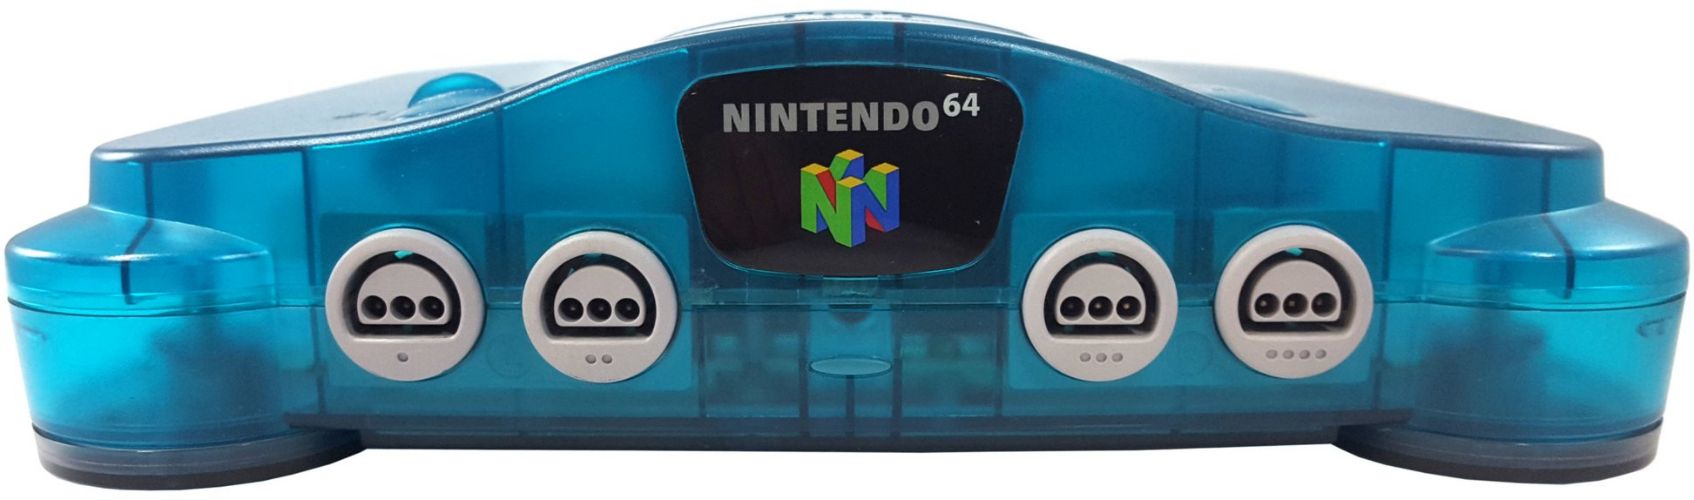 Nintendo 64 Console Teal